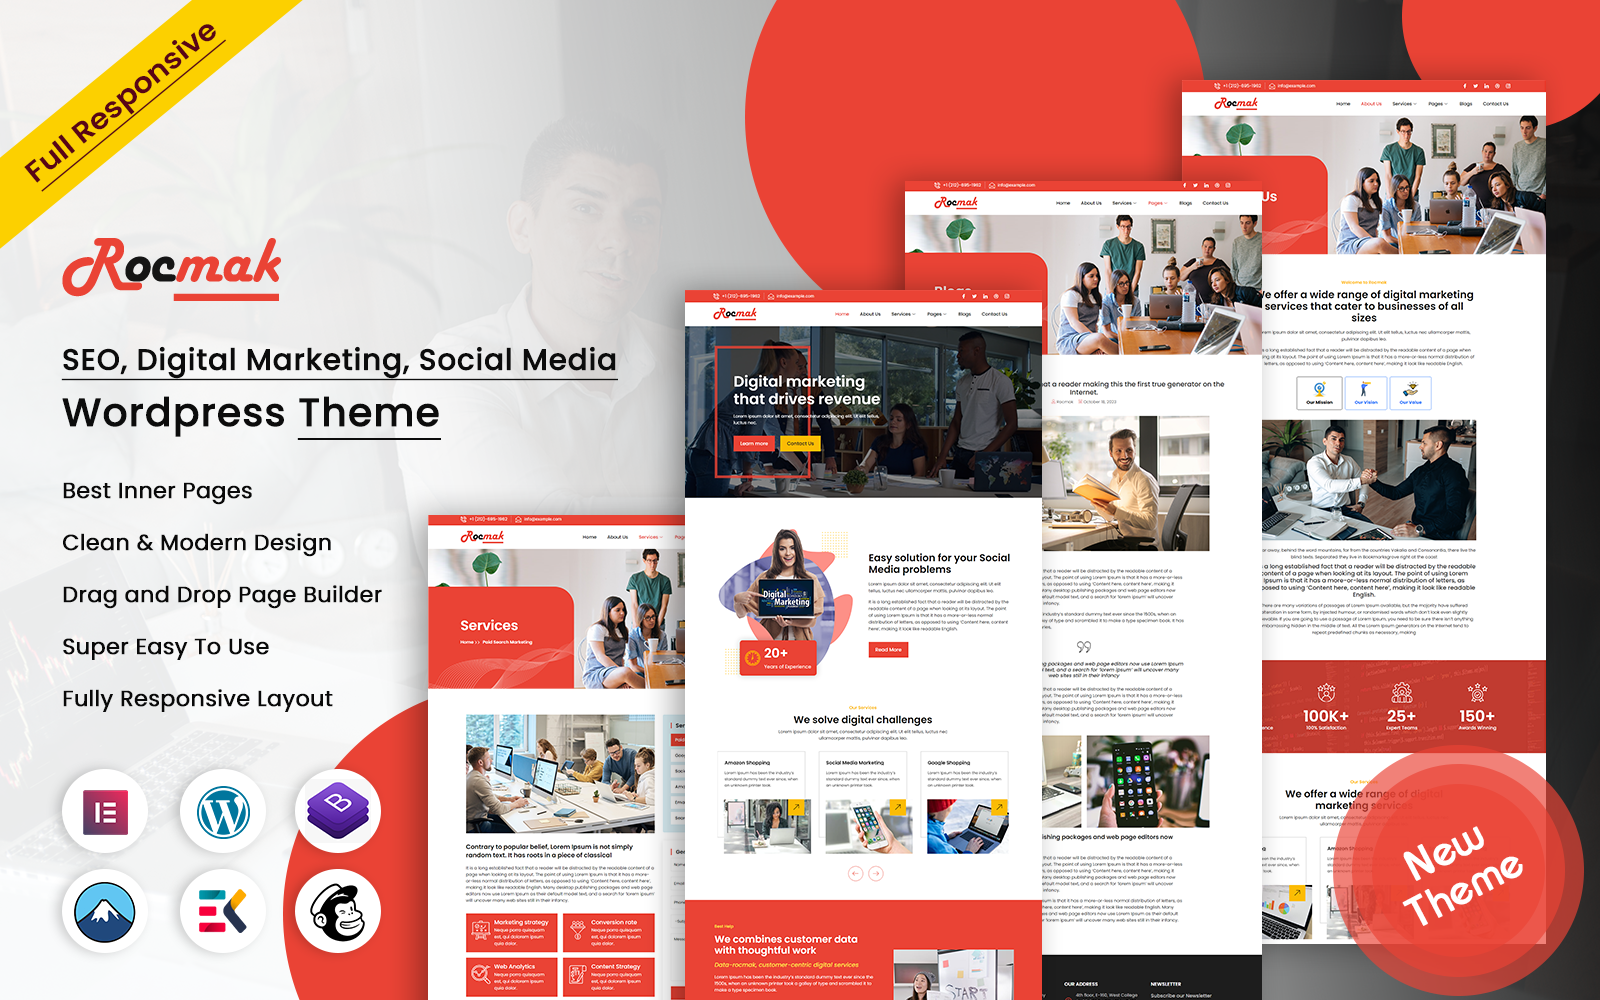 Rocmak - SEO, Digital Marketing, Social Media WordPress Theme